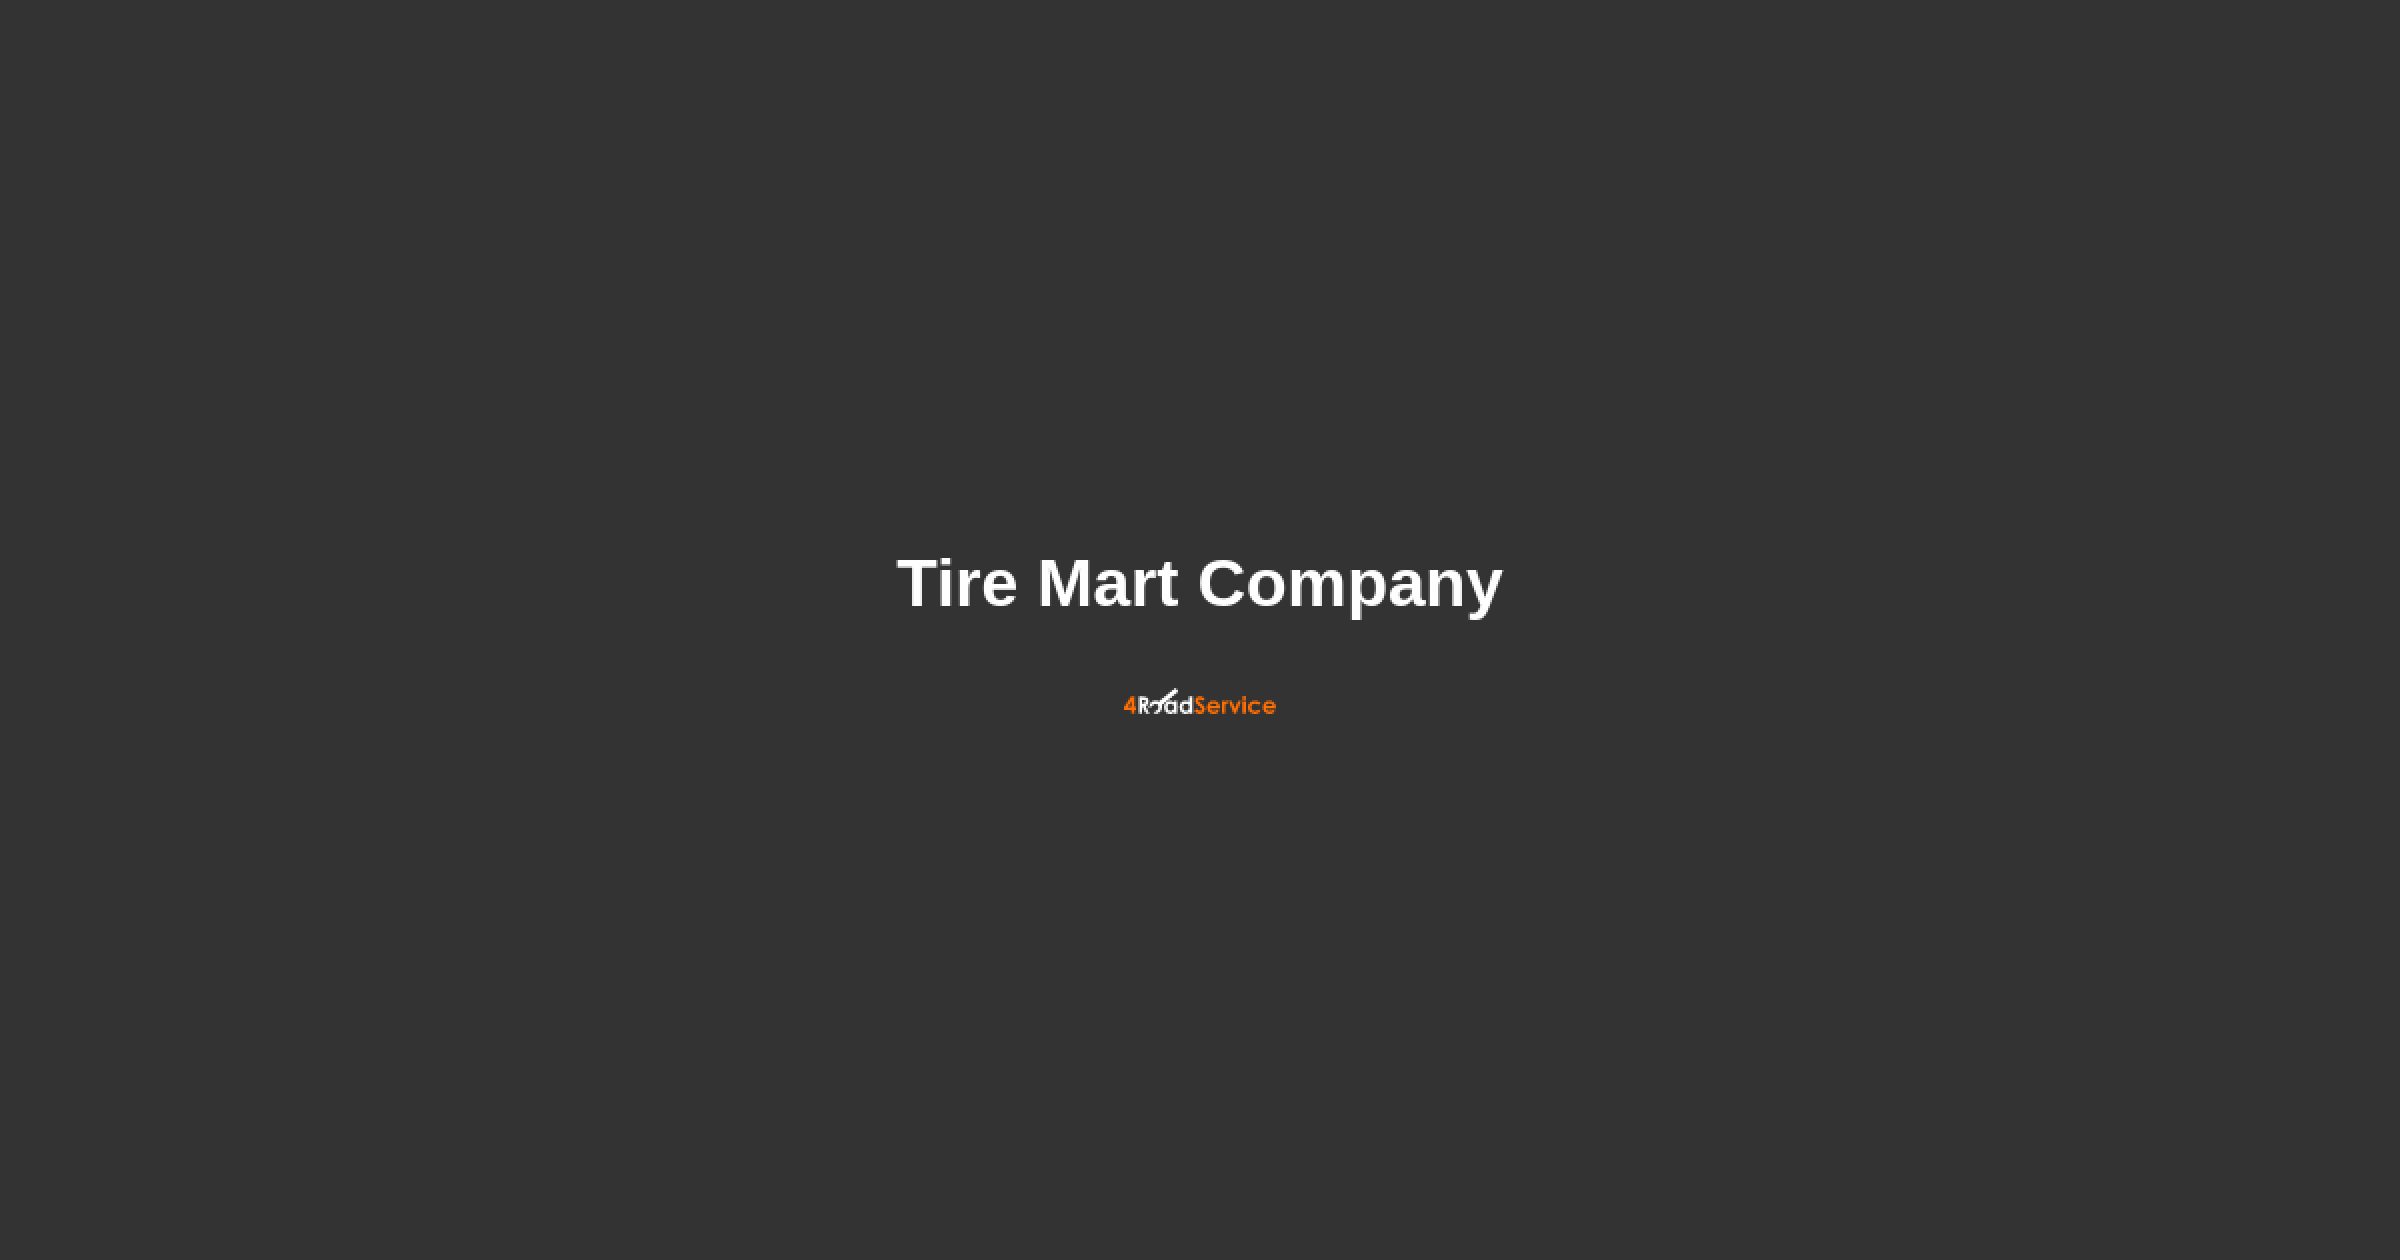 Tire Mart Company in Kingsland, GA ・ 4 Road Service